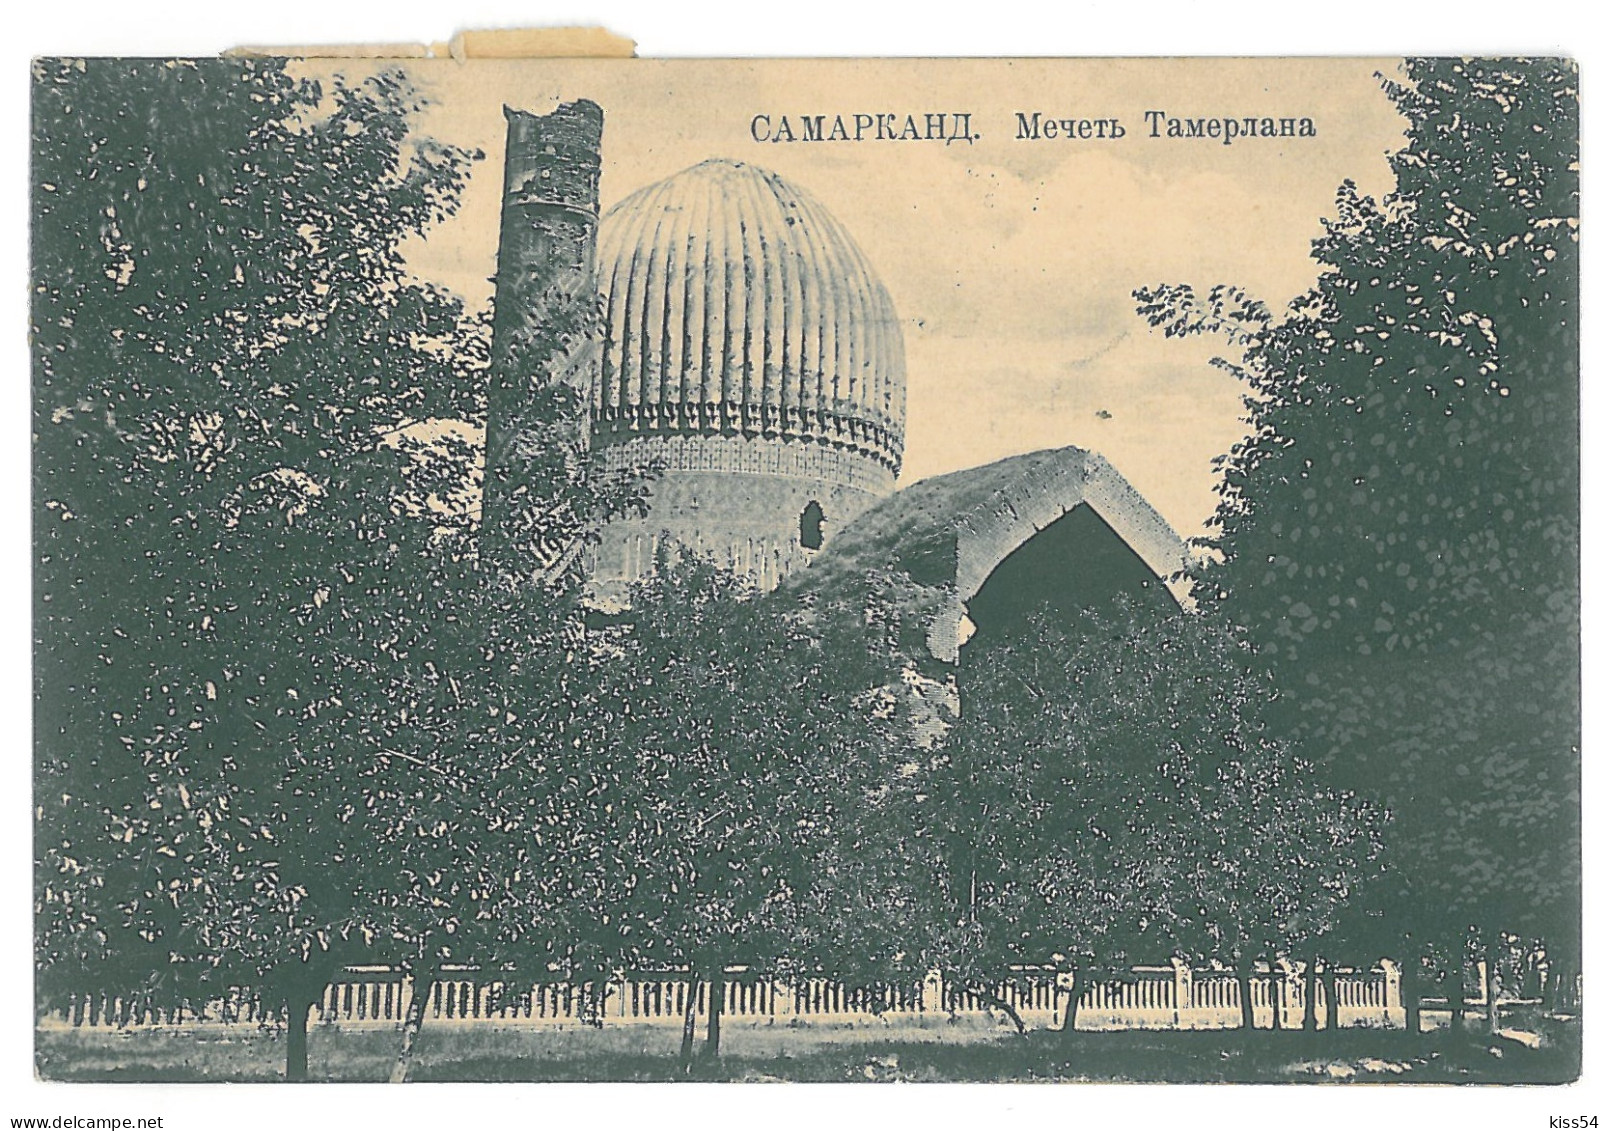 U 25 - 15535 SAMARKAND, Uzbekistan - Old Postcard - Used - Uzbekistan